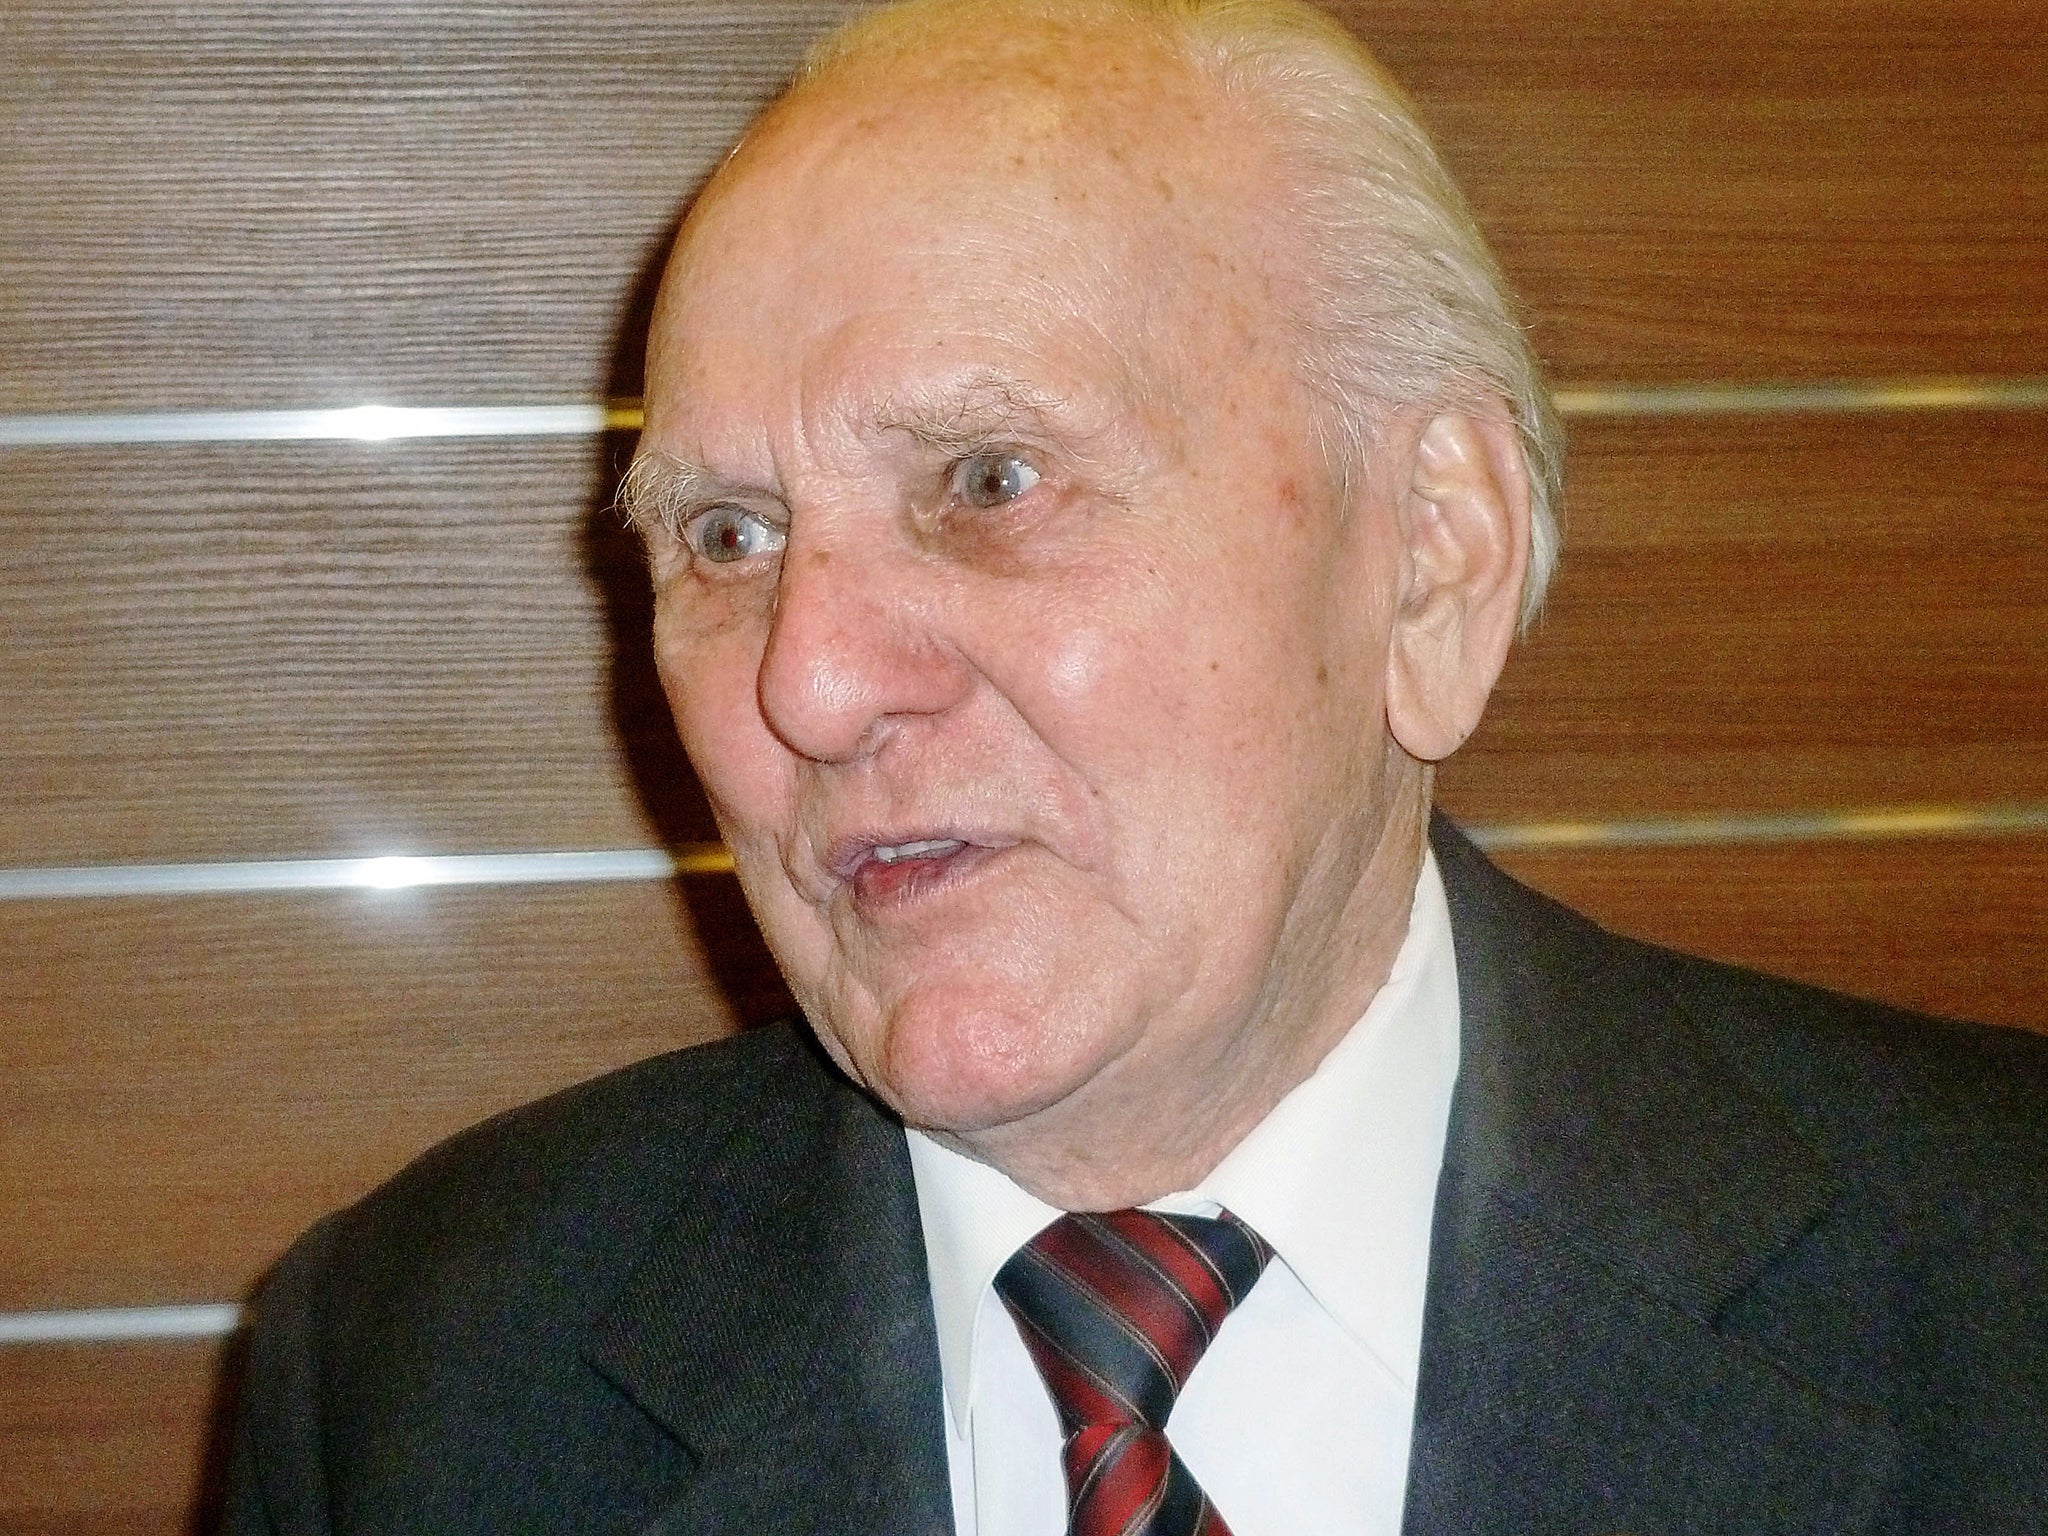 Paczynski: he was one of the longest survivors at Auschwitz